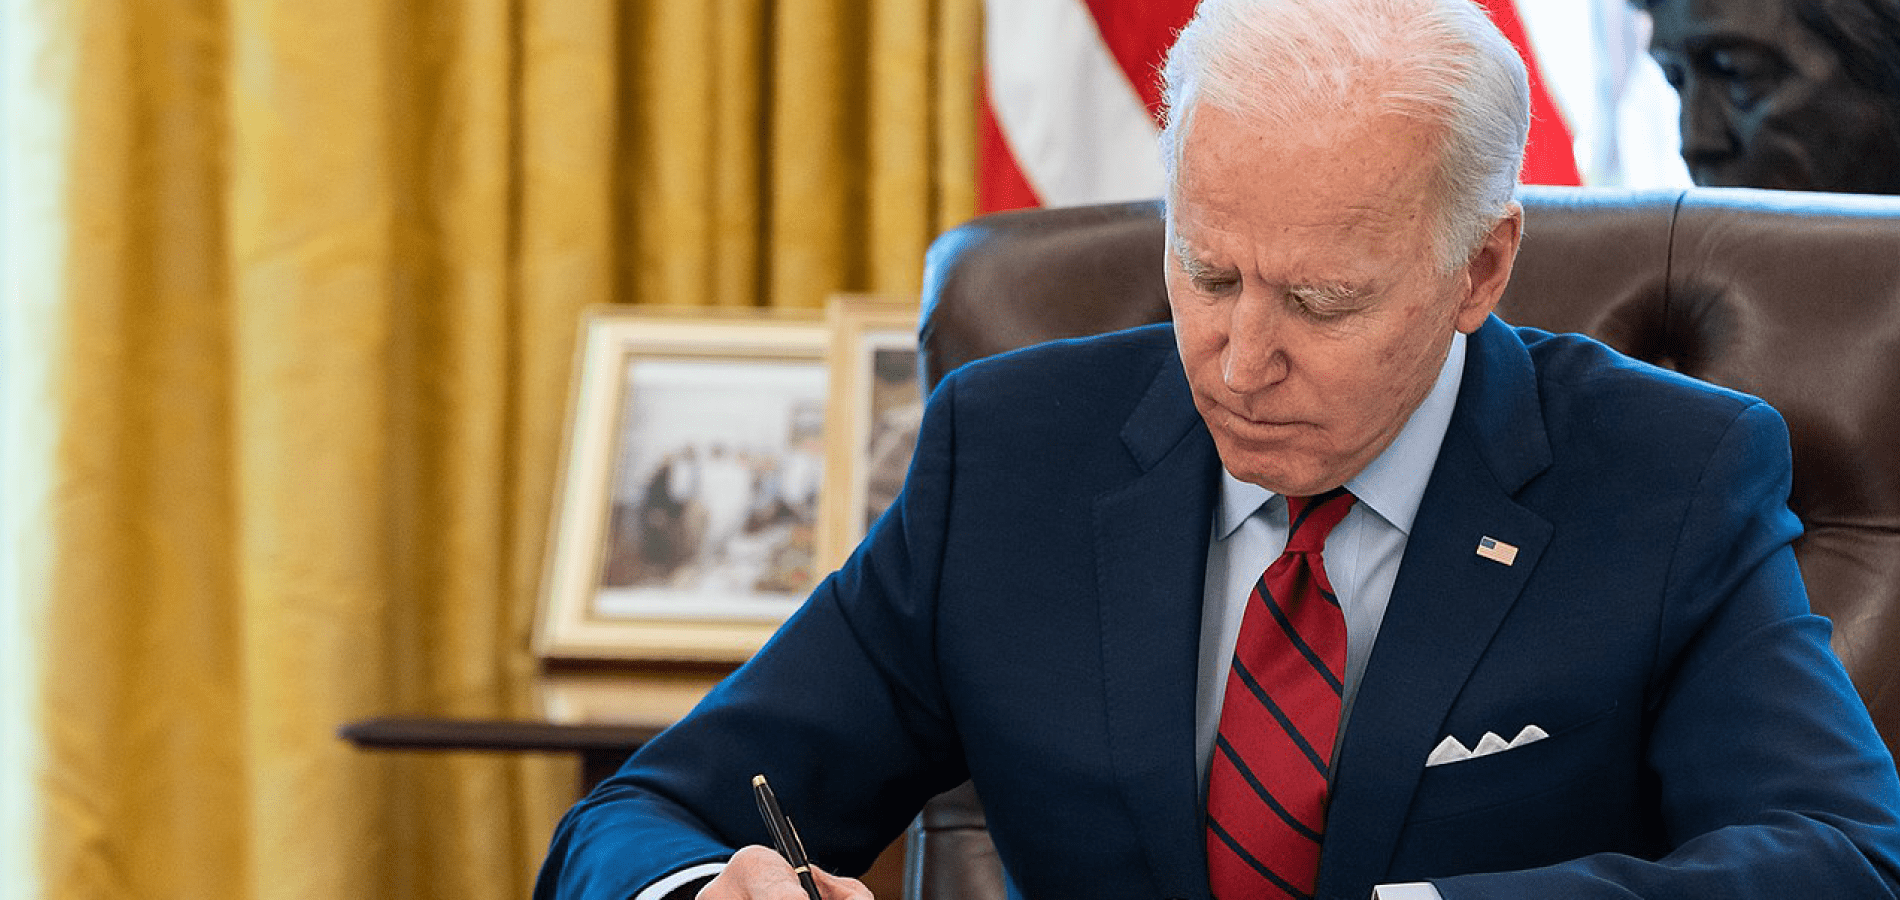 President Joe Biden signing documents